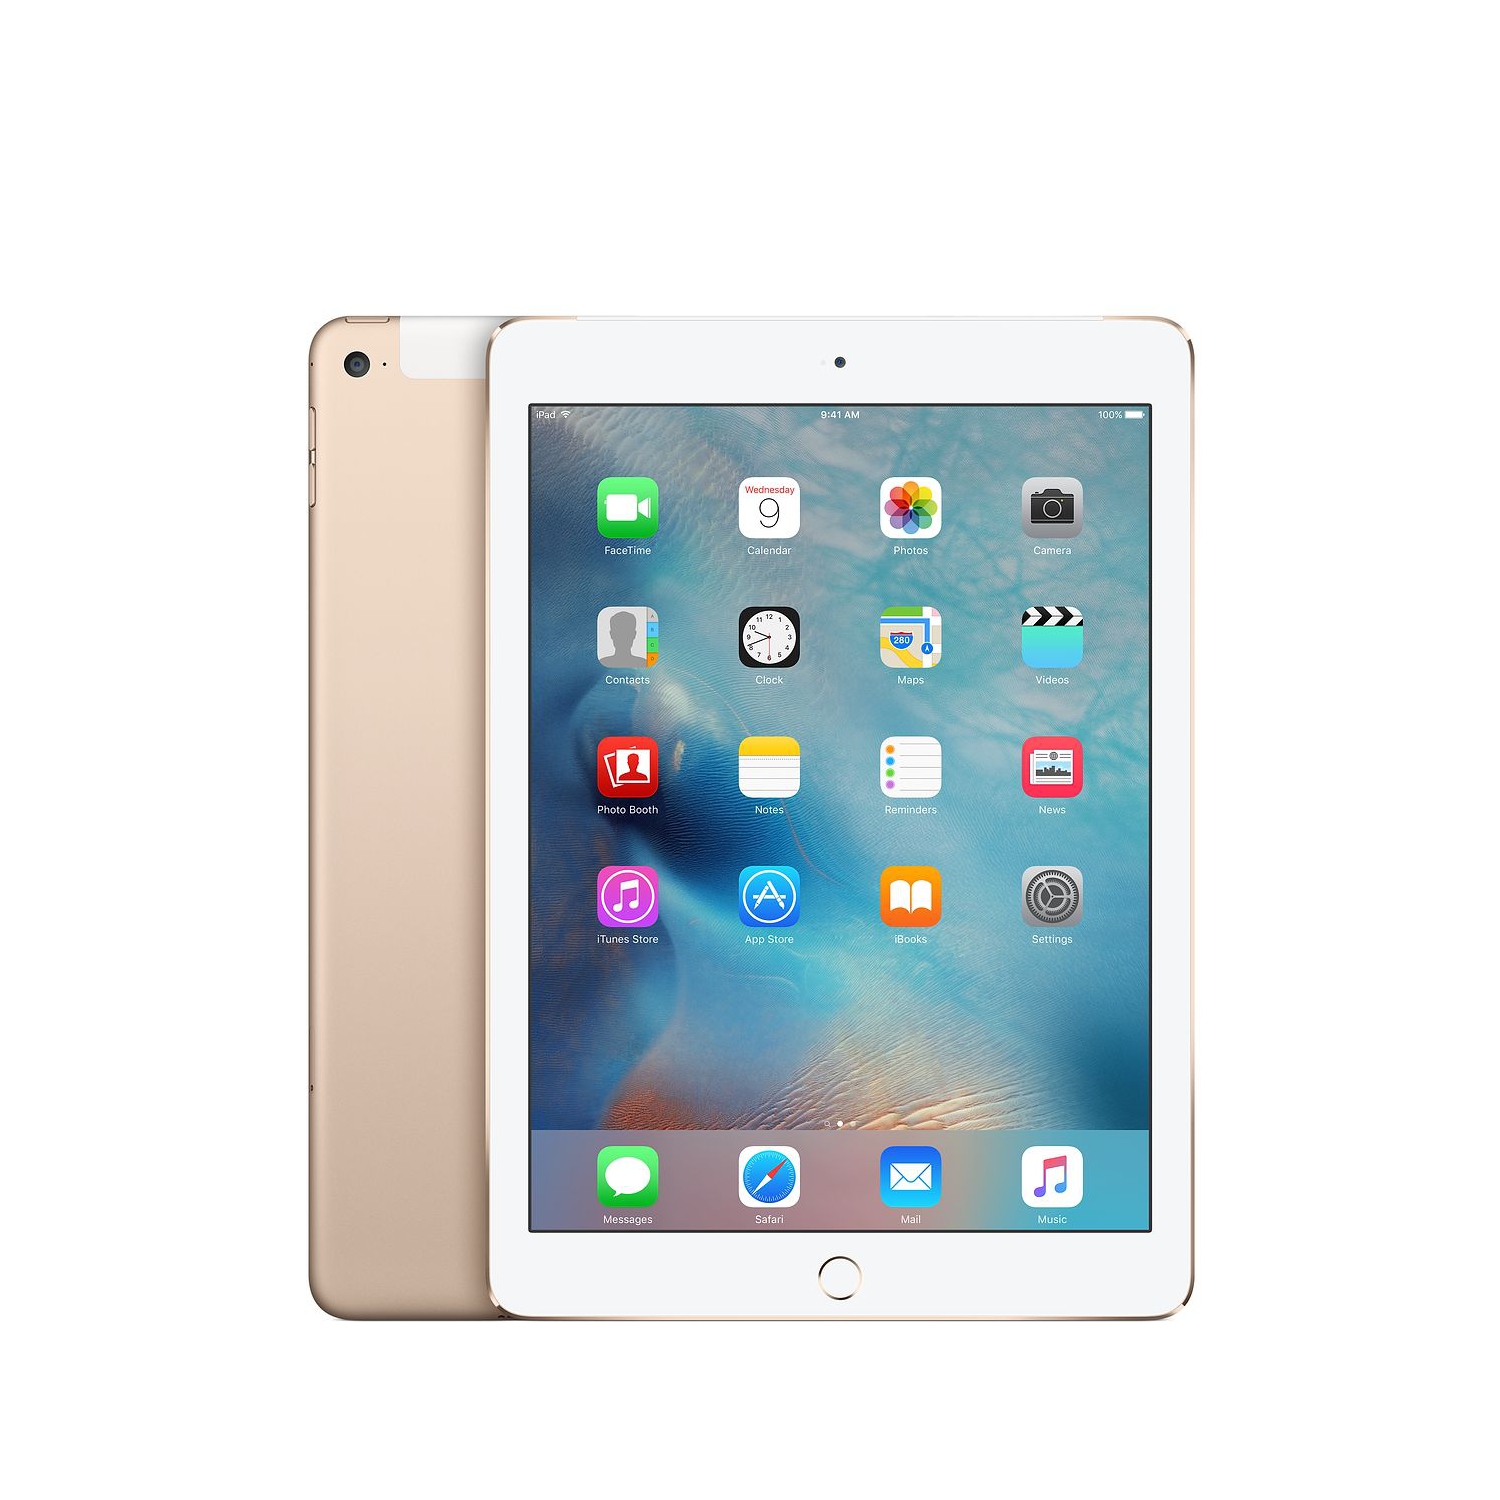 Refurbished (Good) - Apple iPad Air 2 9.7" screen 16GB - WiFi + Cellular (2014 - A1567) Gold